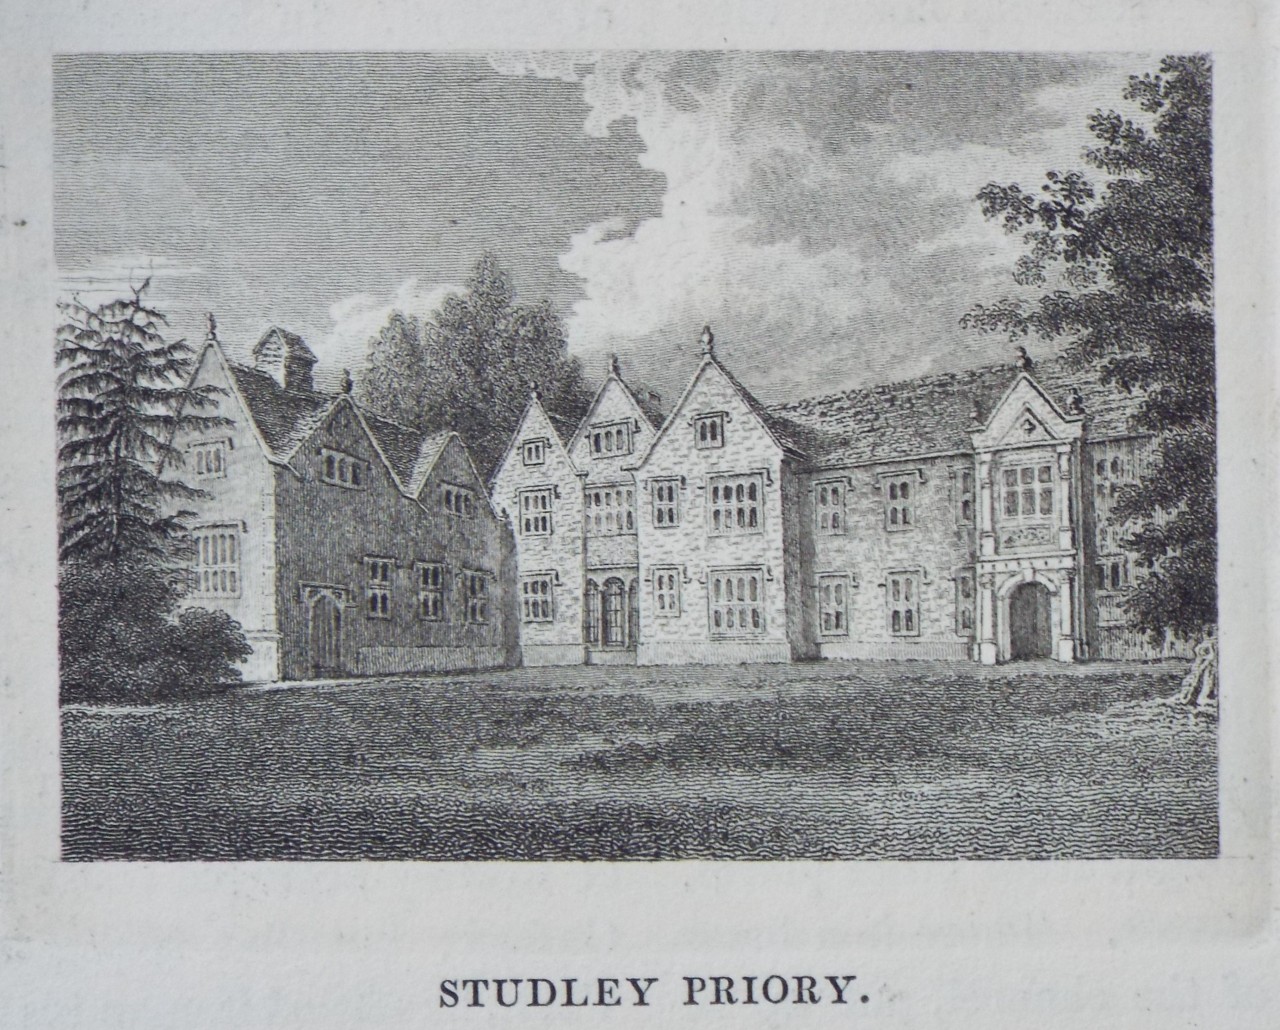 Print - Studley Priory.